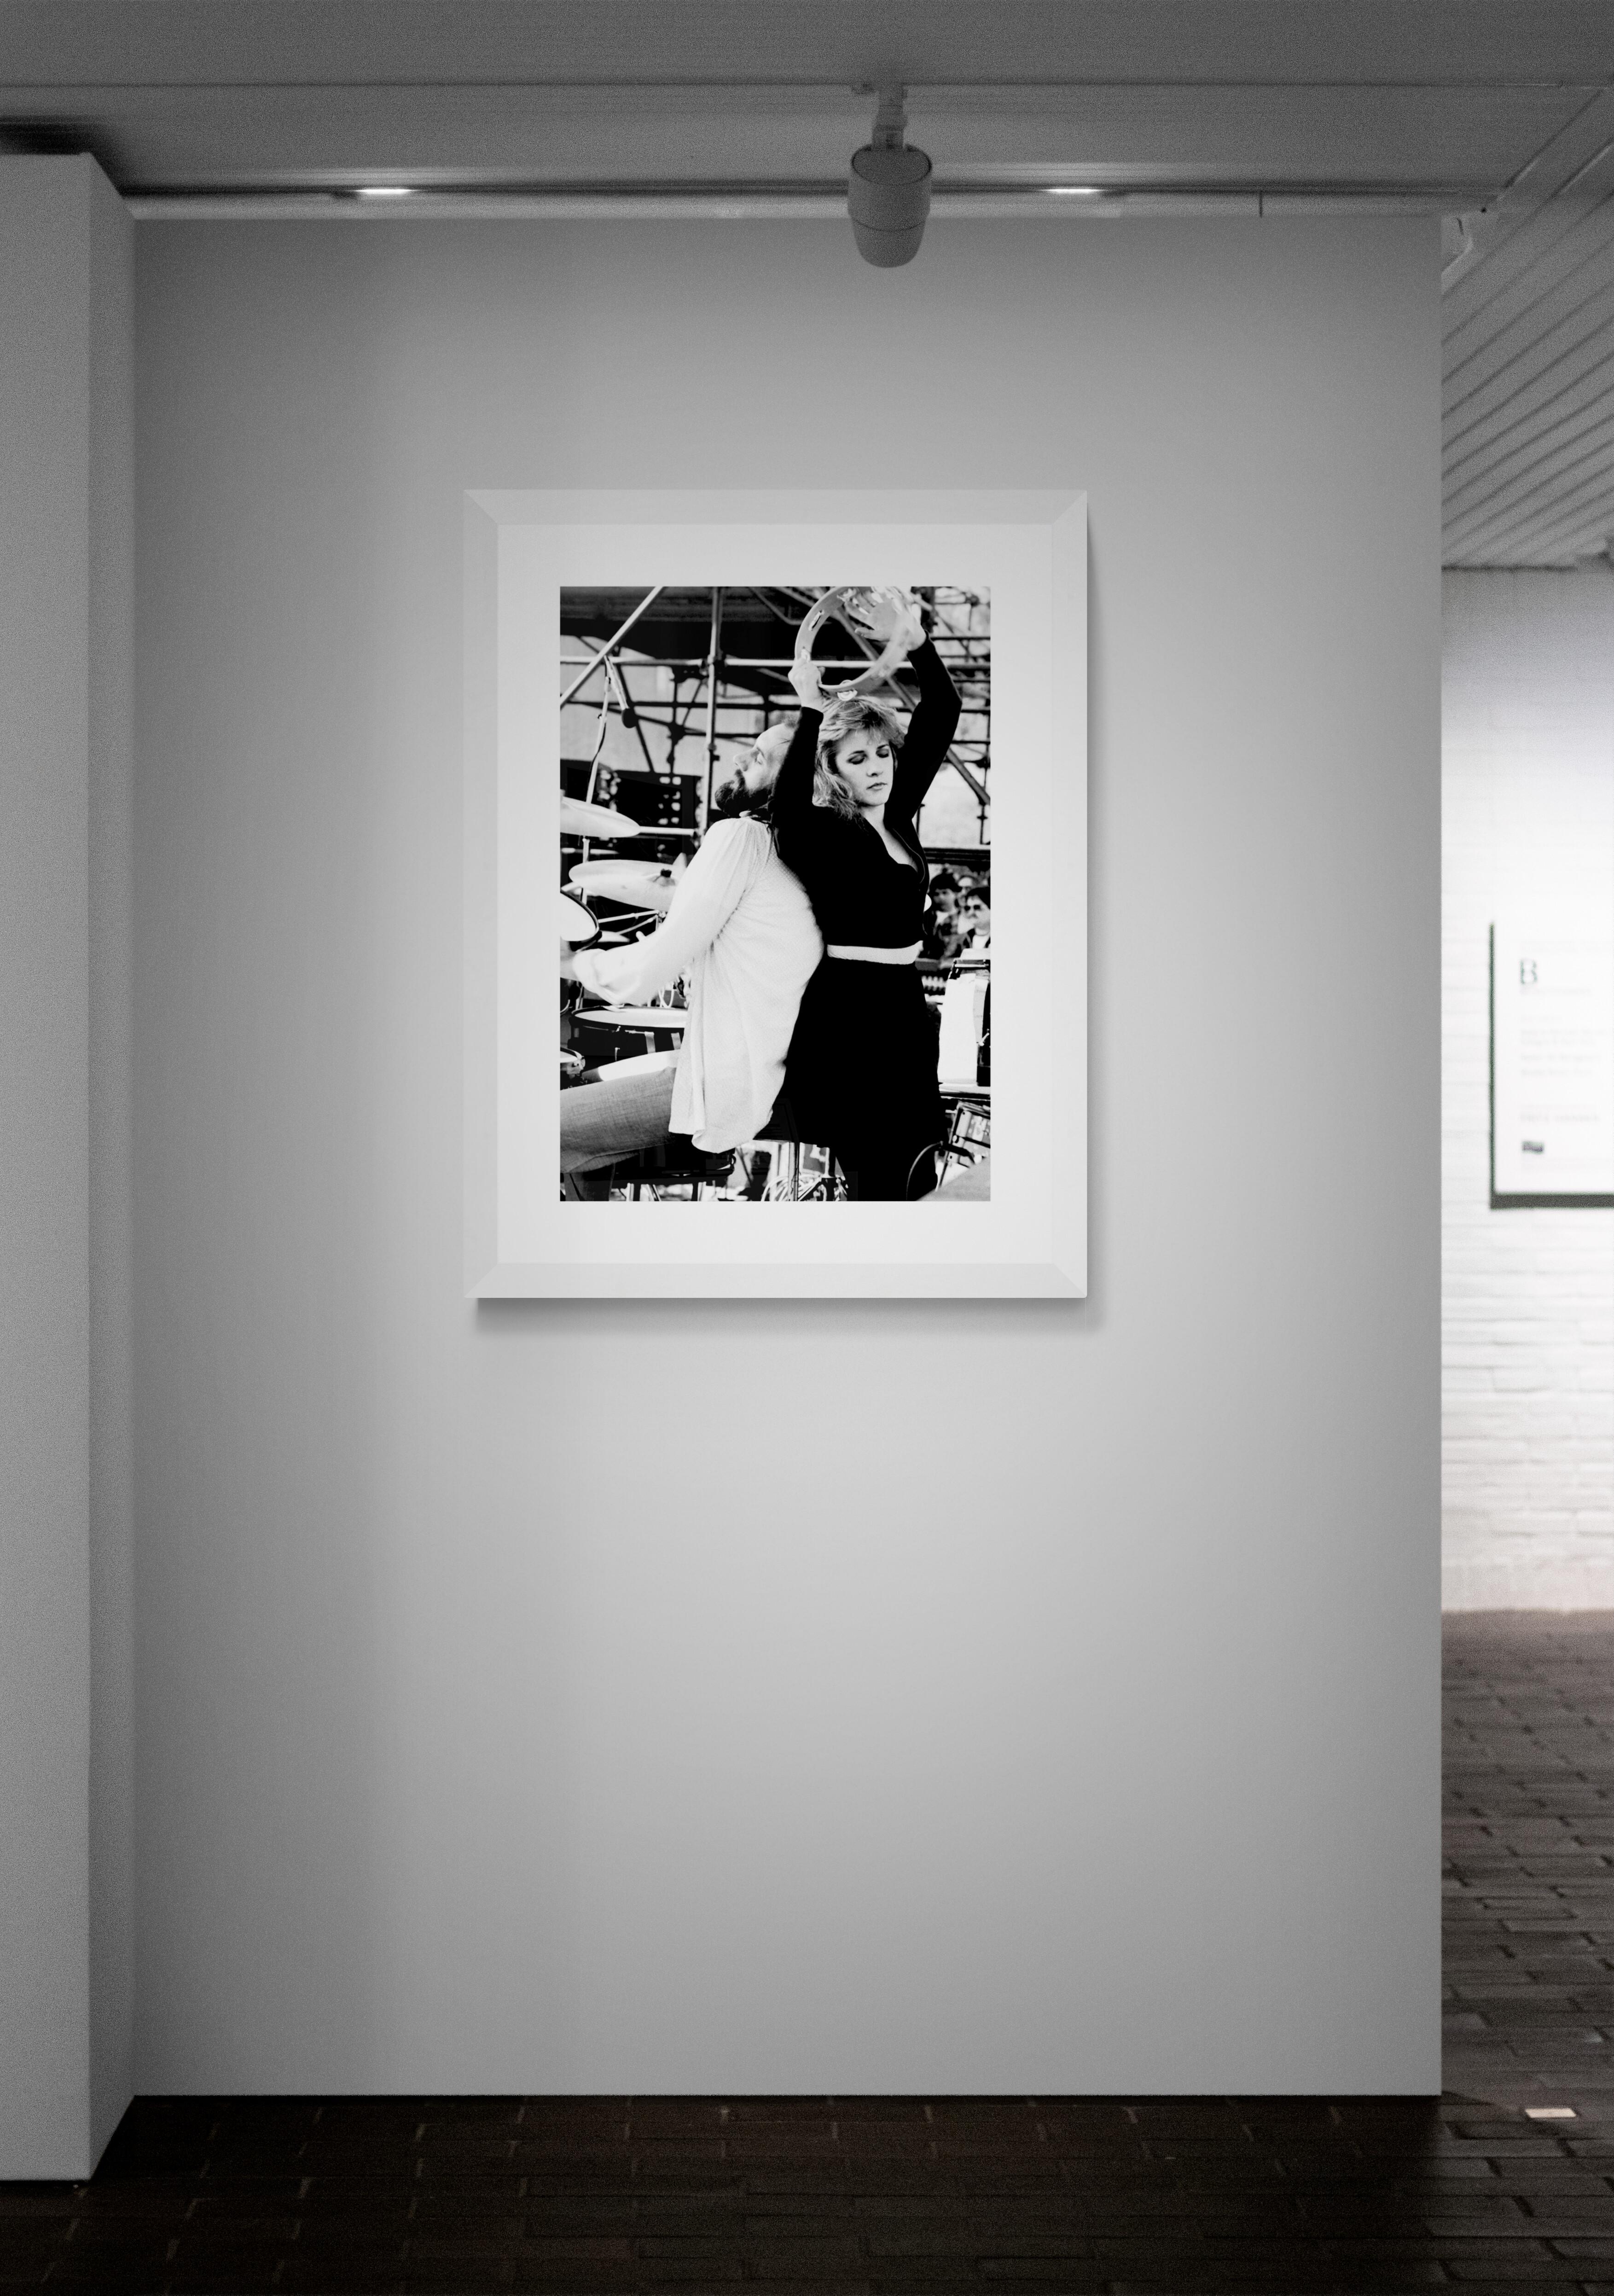 Fleetwood Mac #1 Foto (Schwarz), Black and White Photograph, von Richard E. Aaron